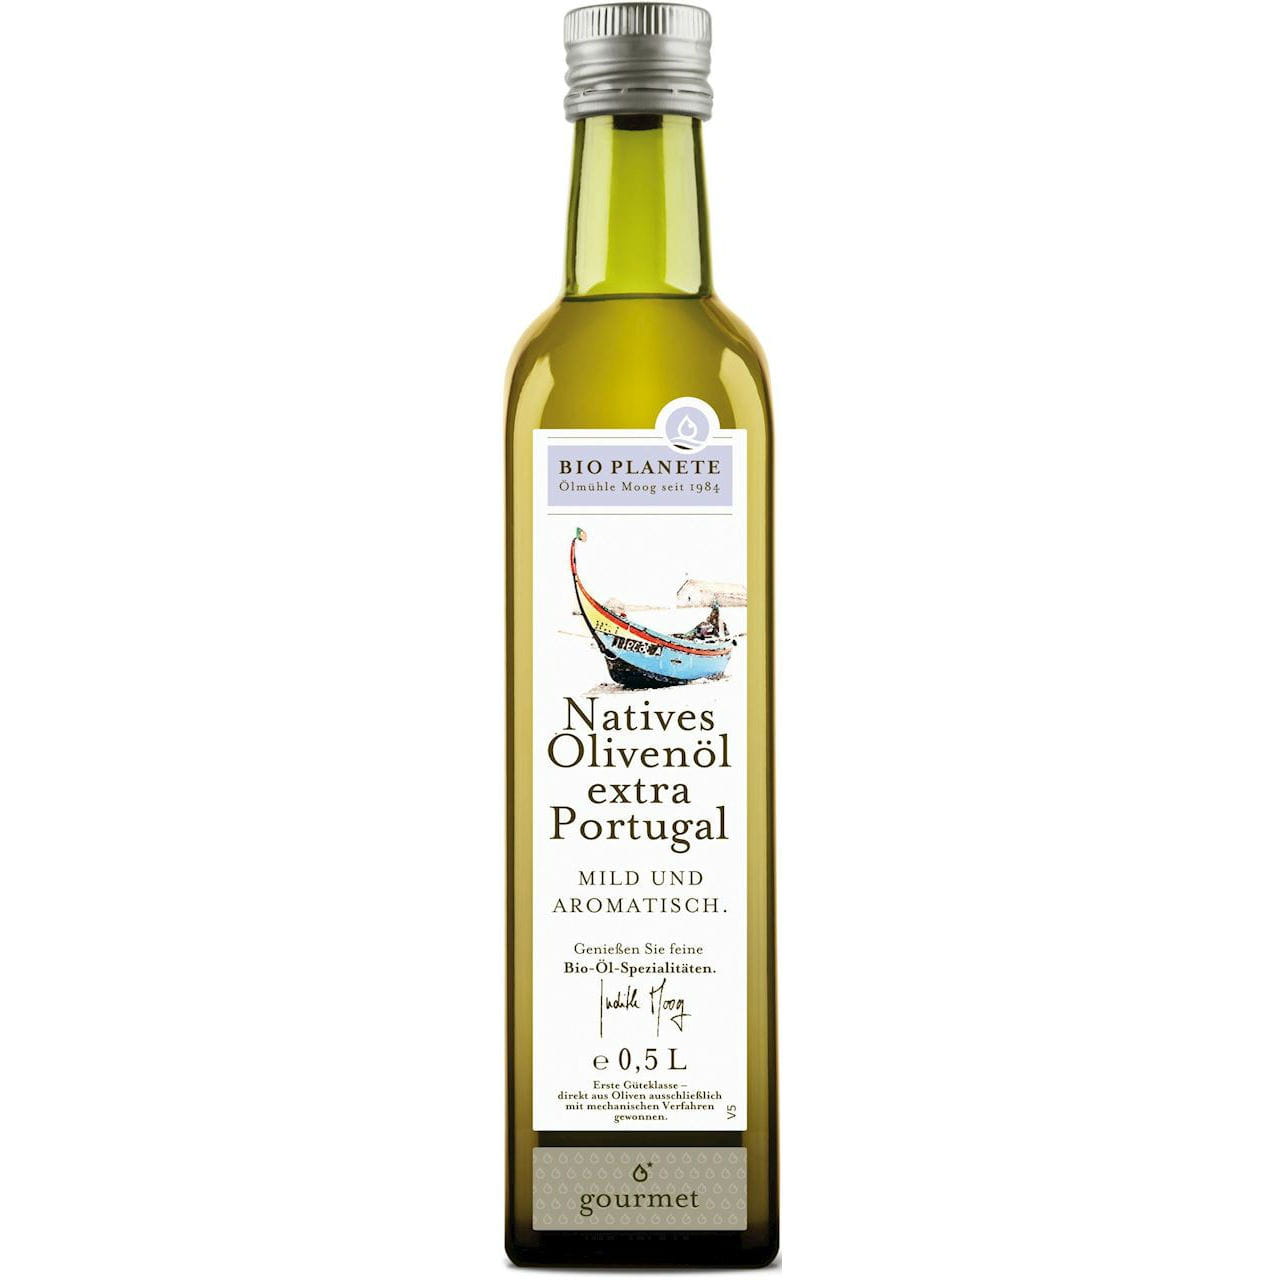 Natives Olivenöl extra Portugal BIO 500 ml - BIO PLANETE